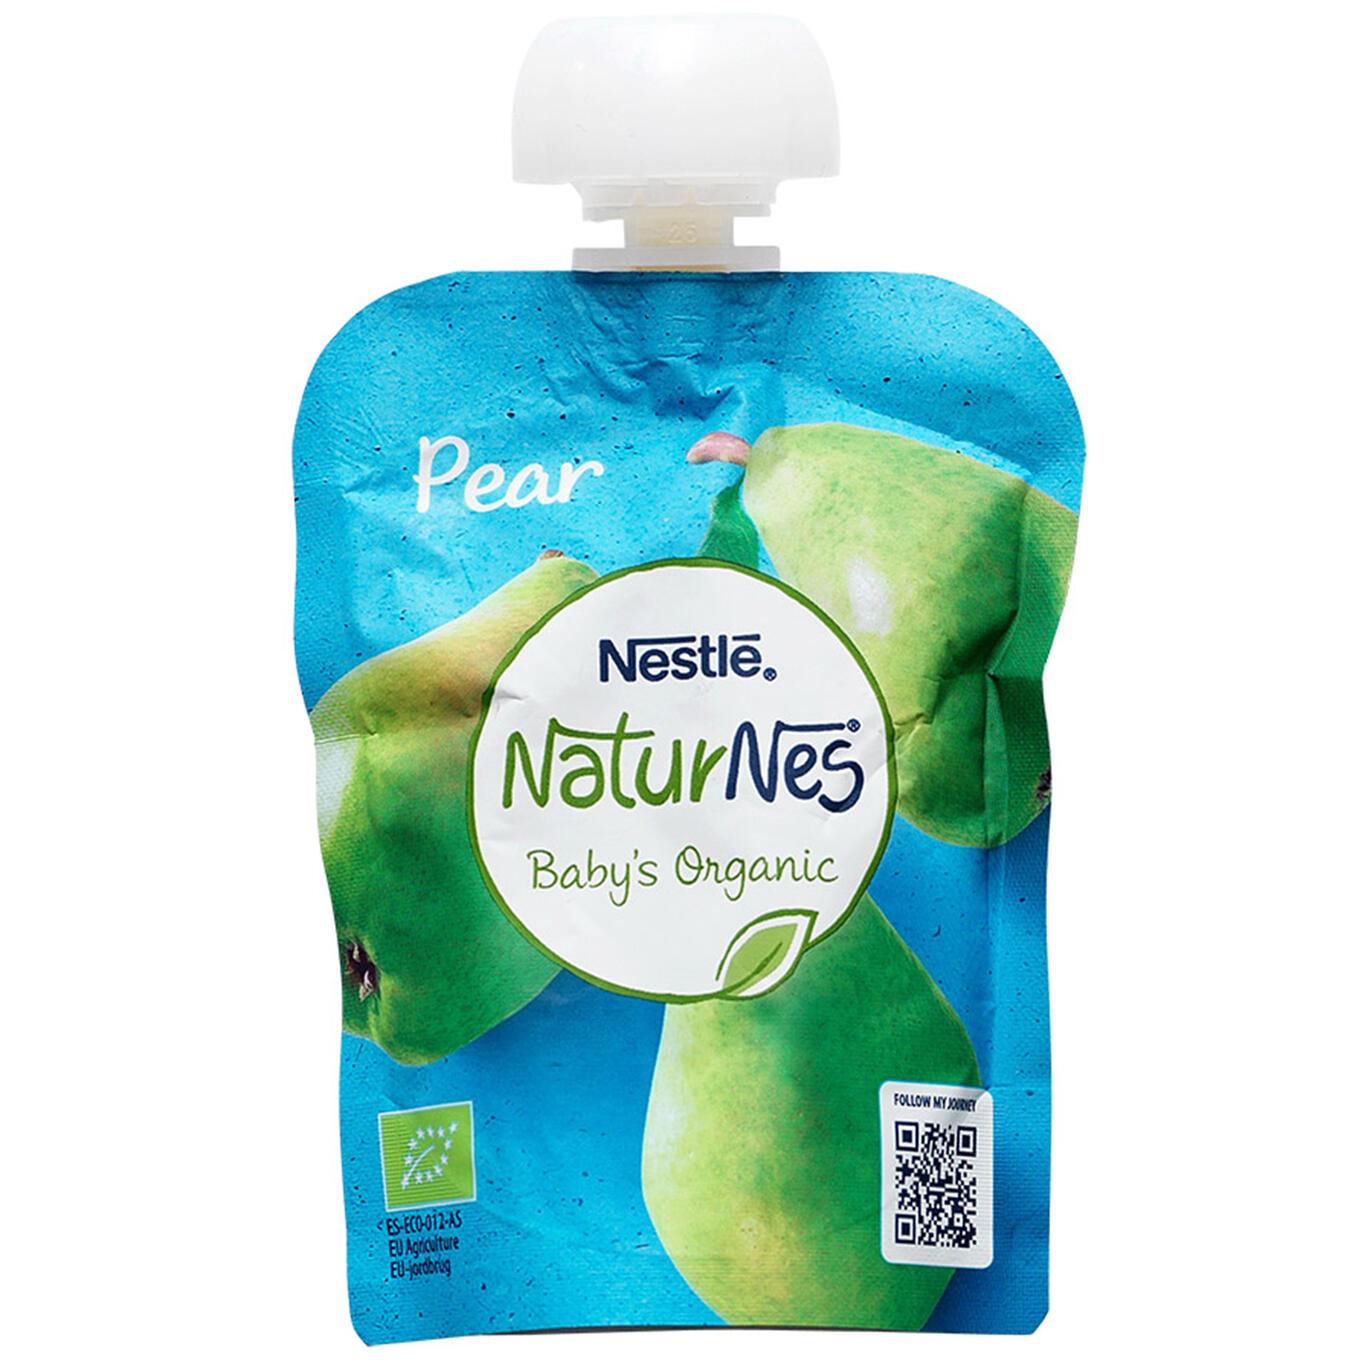 Pear Nestlé NaturNes Baby's Organic